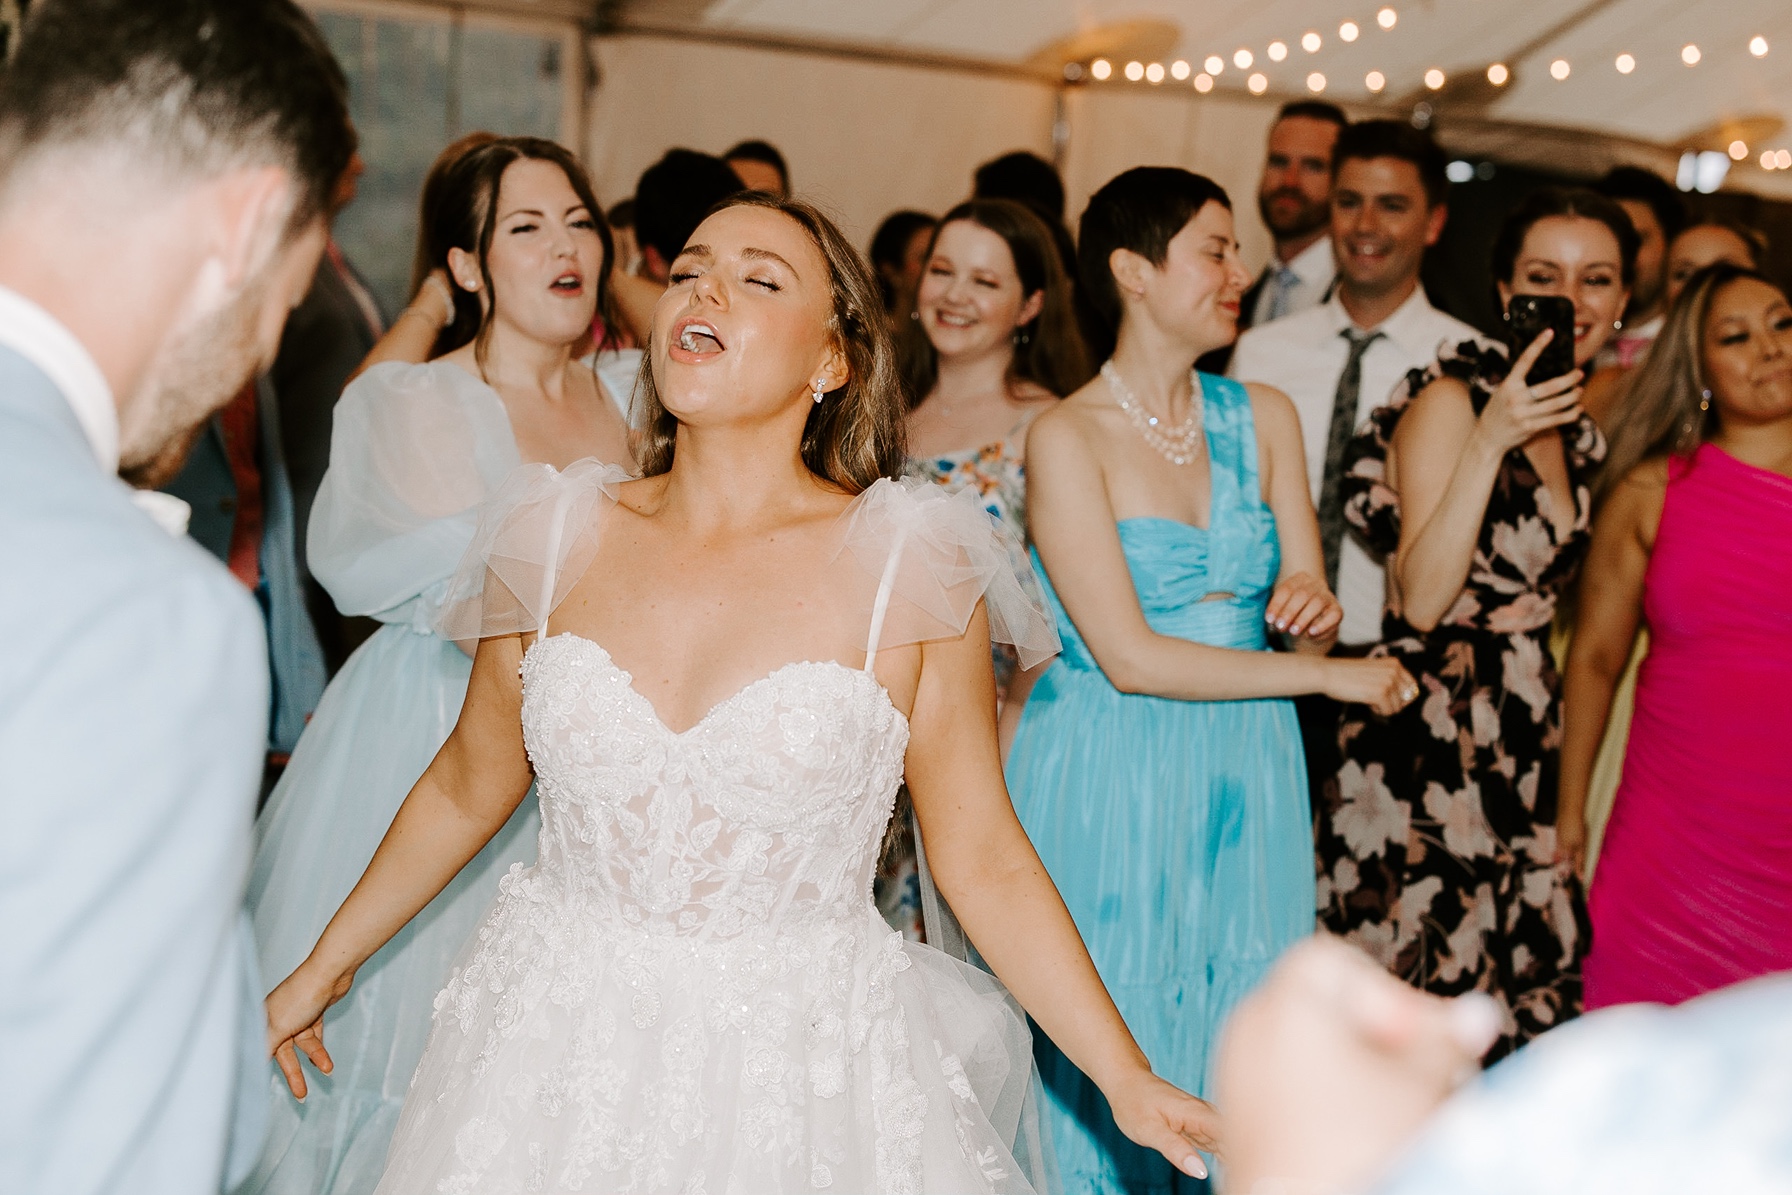 Bride sings and dances on the dance floor